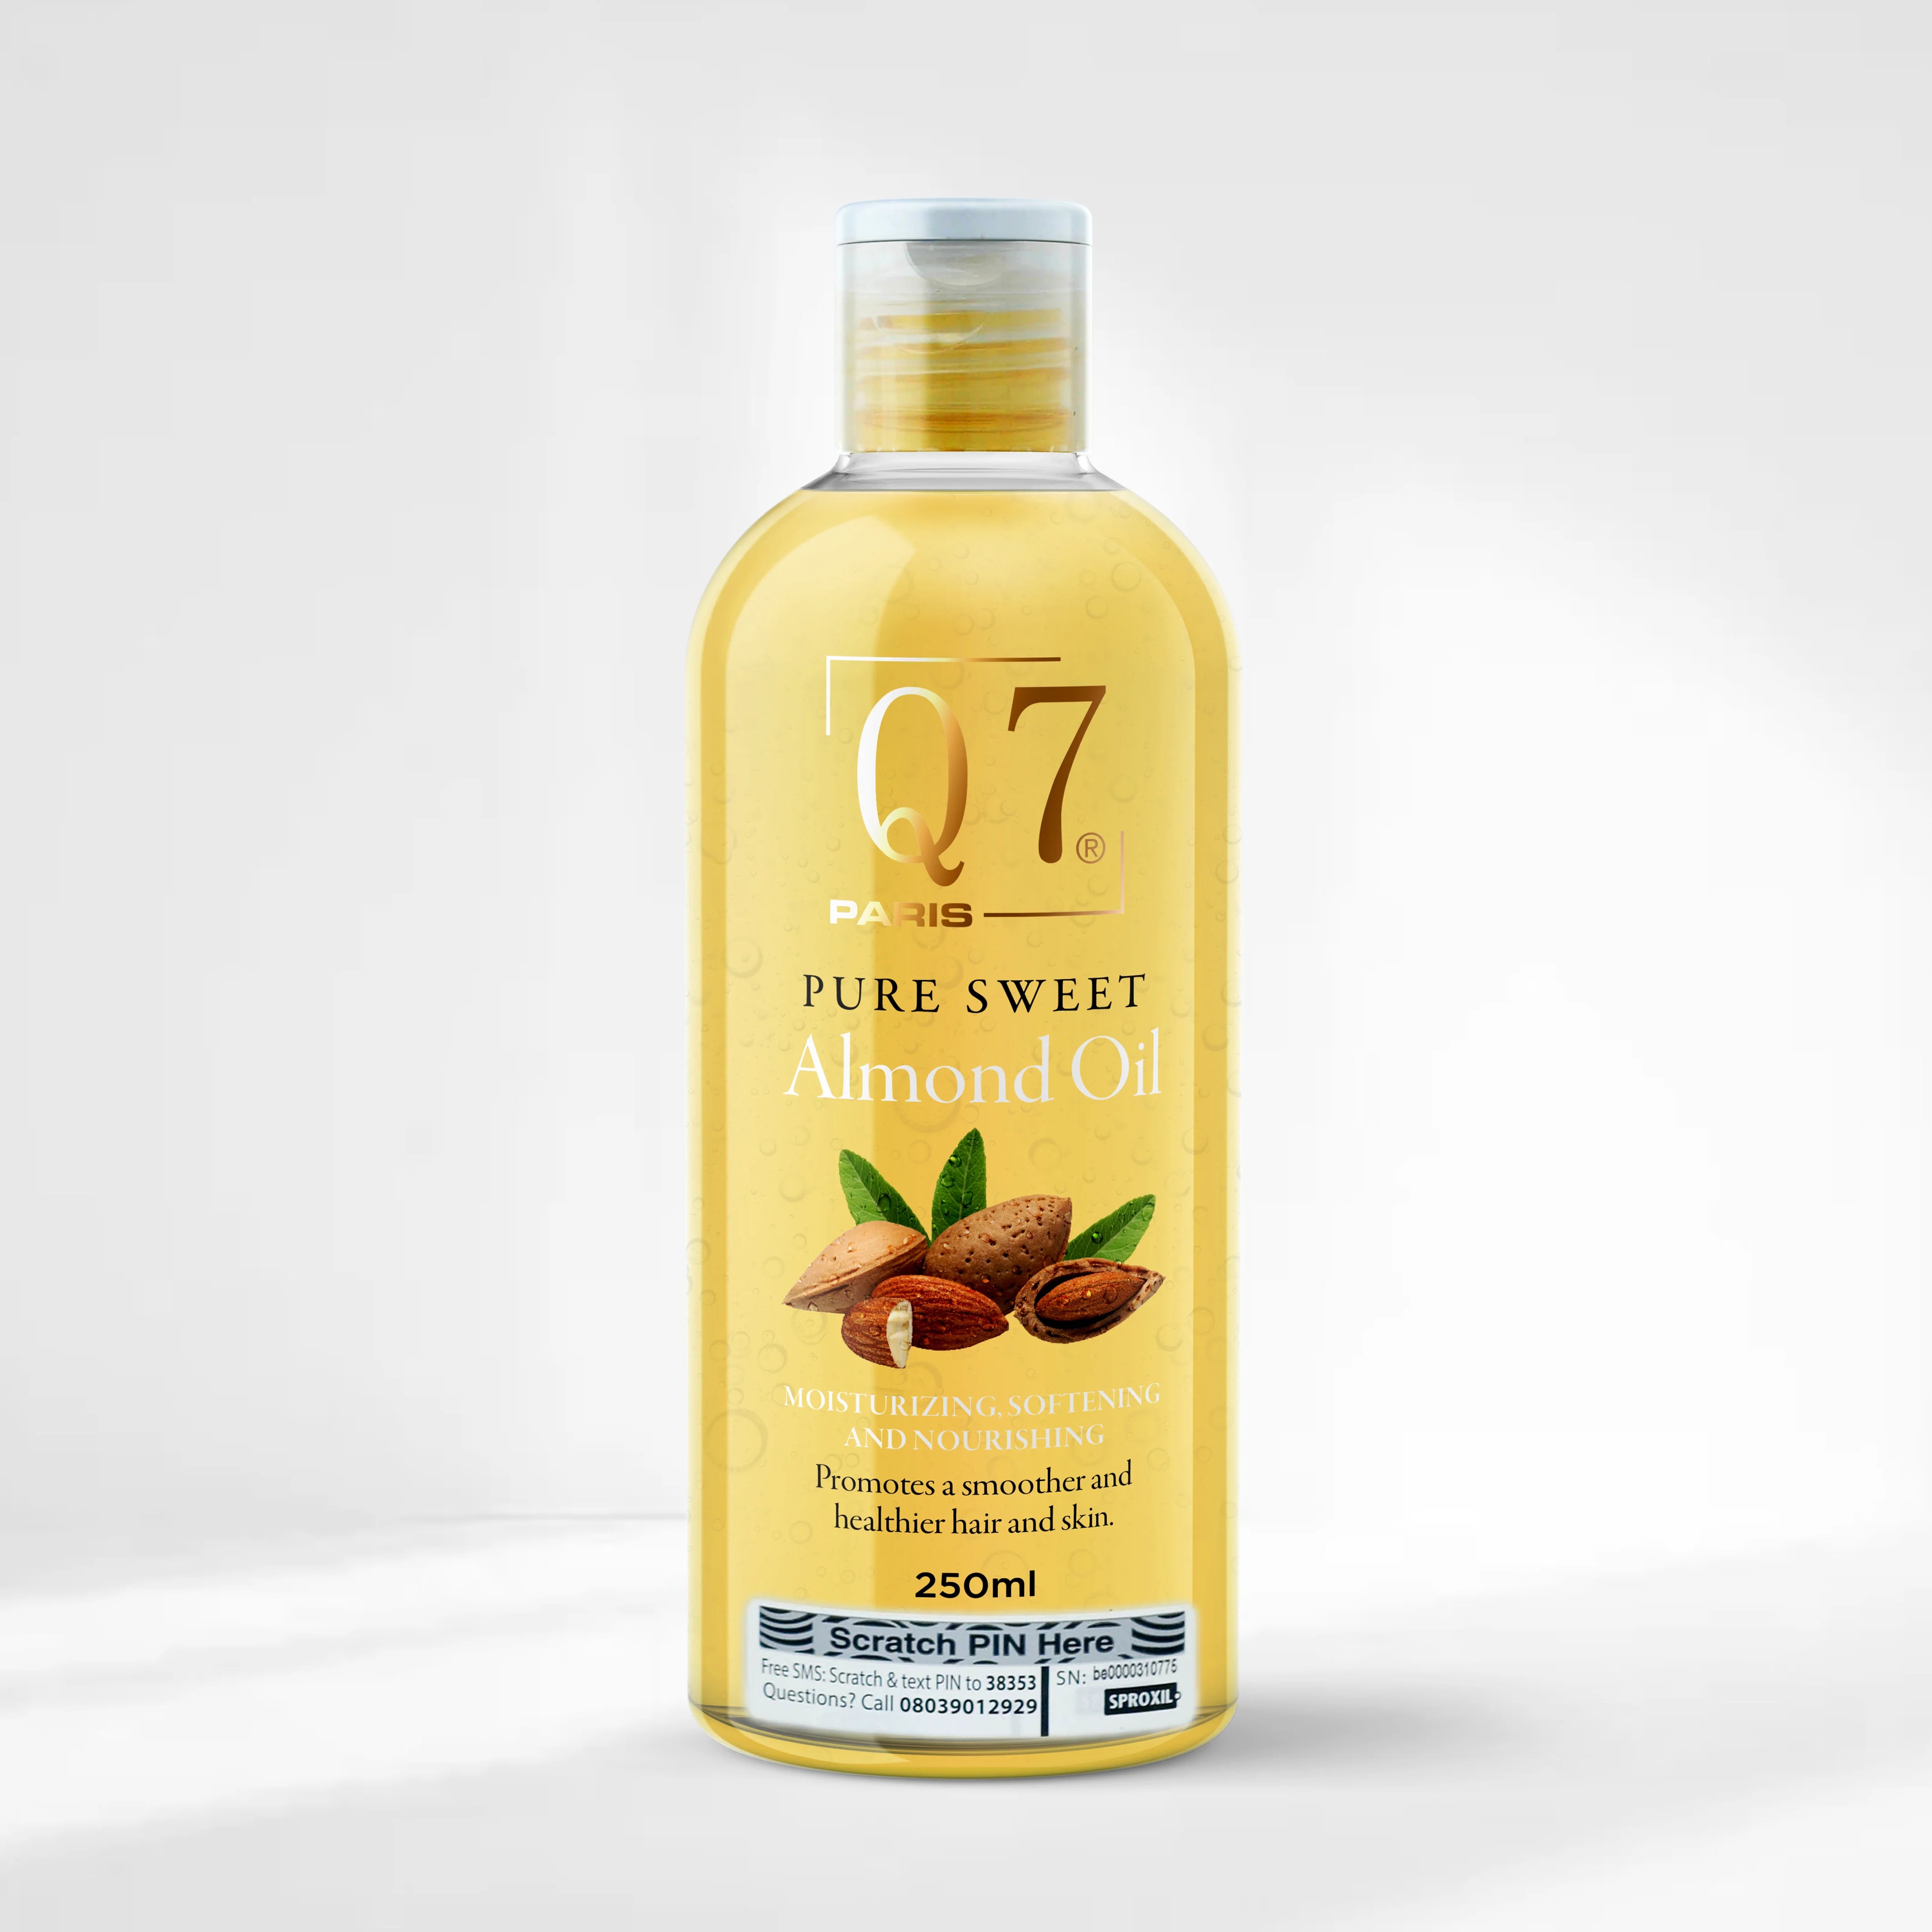 Q7Paris 100% Pure Sweet Almond Oil – 250ml